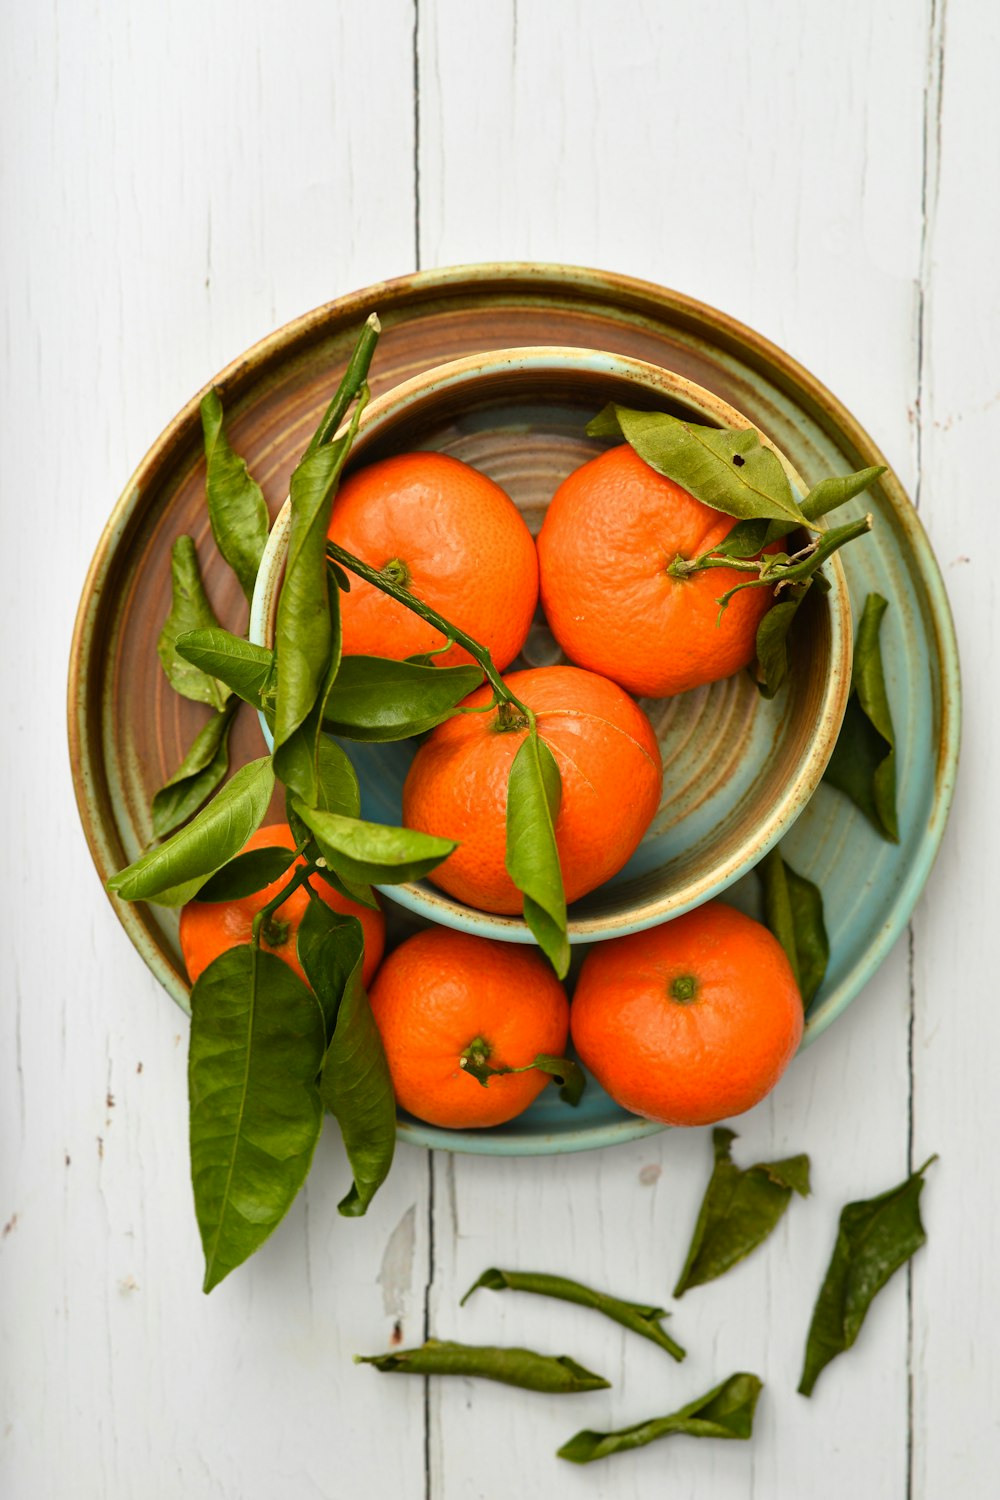 orange fruits in green round plastic container